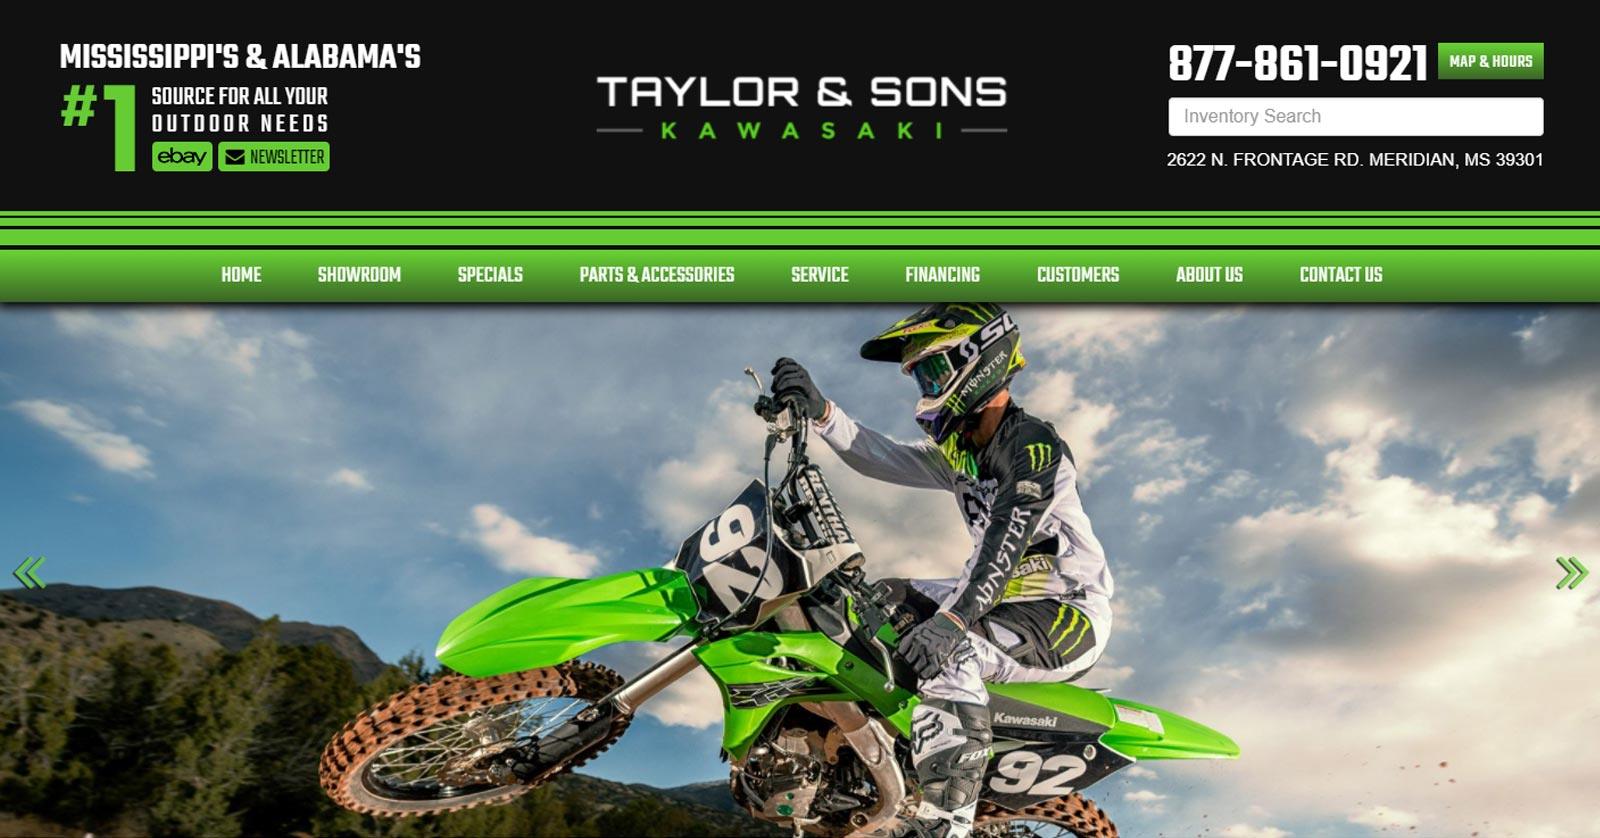 Taylor & Sons Kawasaki, Meridian MS | ATV, Motorcycle, Jet Ski, SxS, Power Equipment